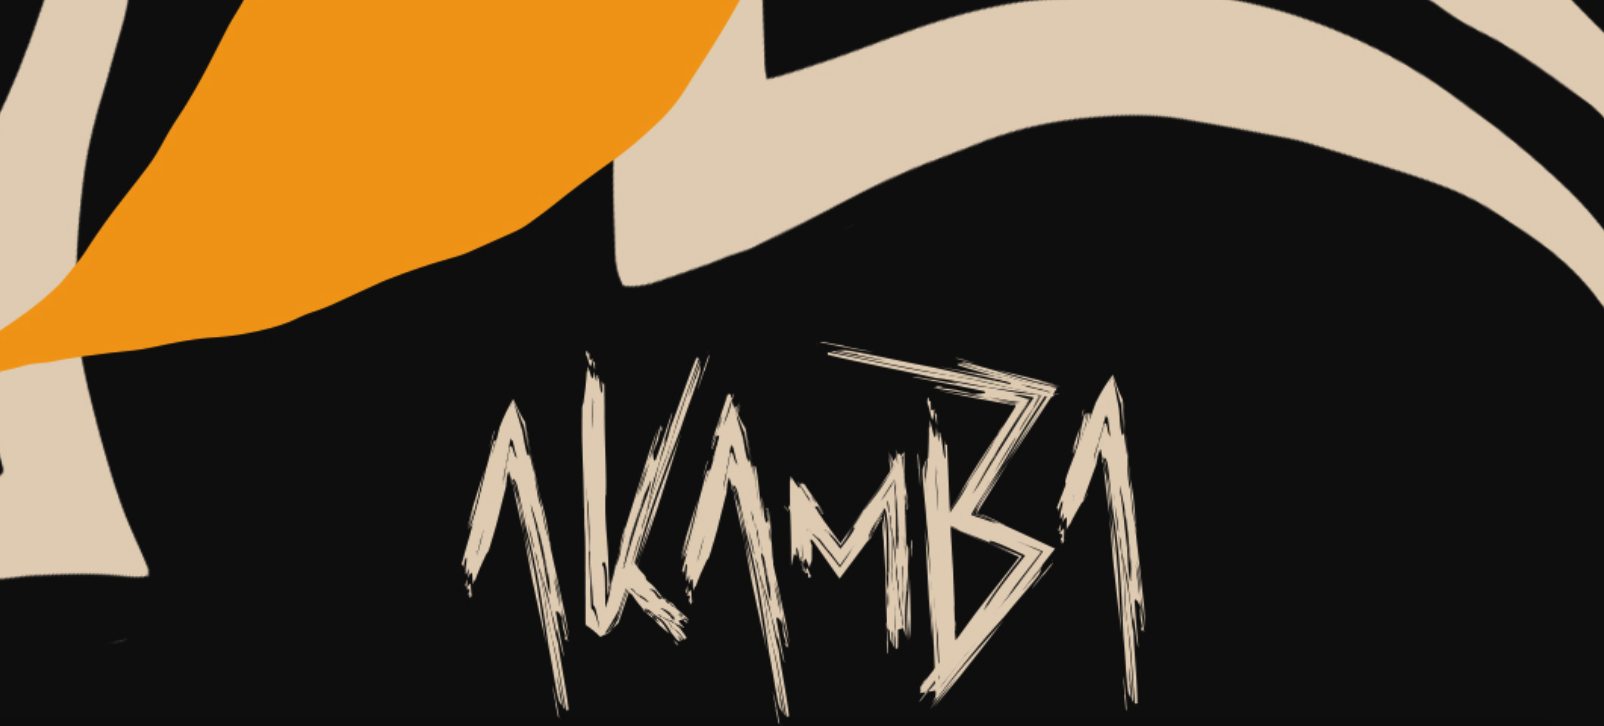 Akamba